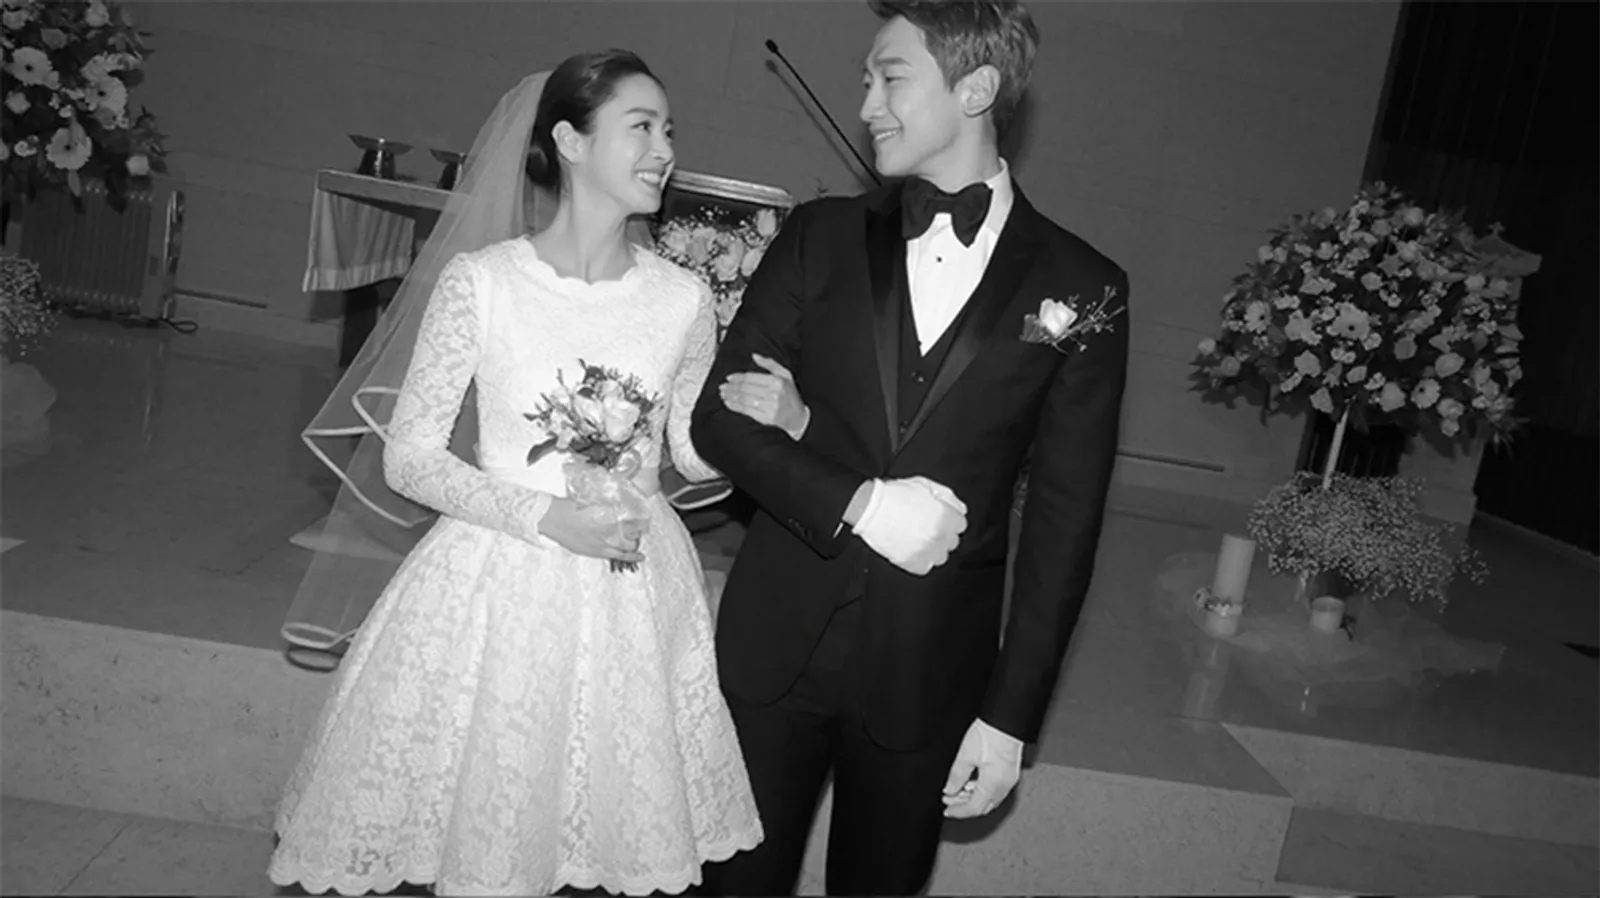 Rain dan Kim Tae Hee Menikah, Inilah Momen Paling Berkesan Bagi Mereka Berdua